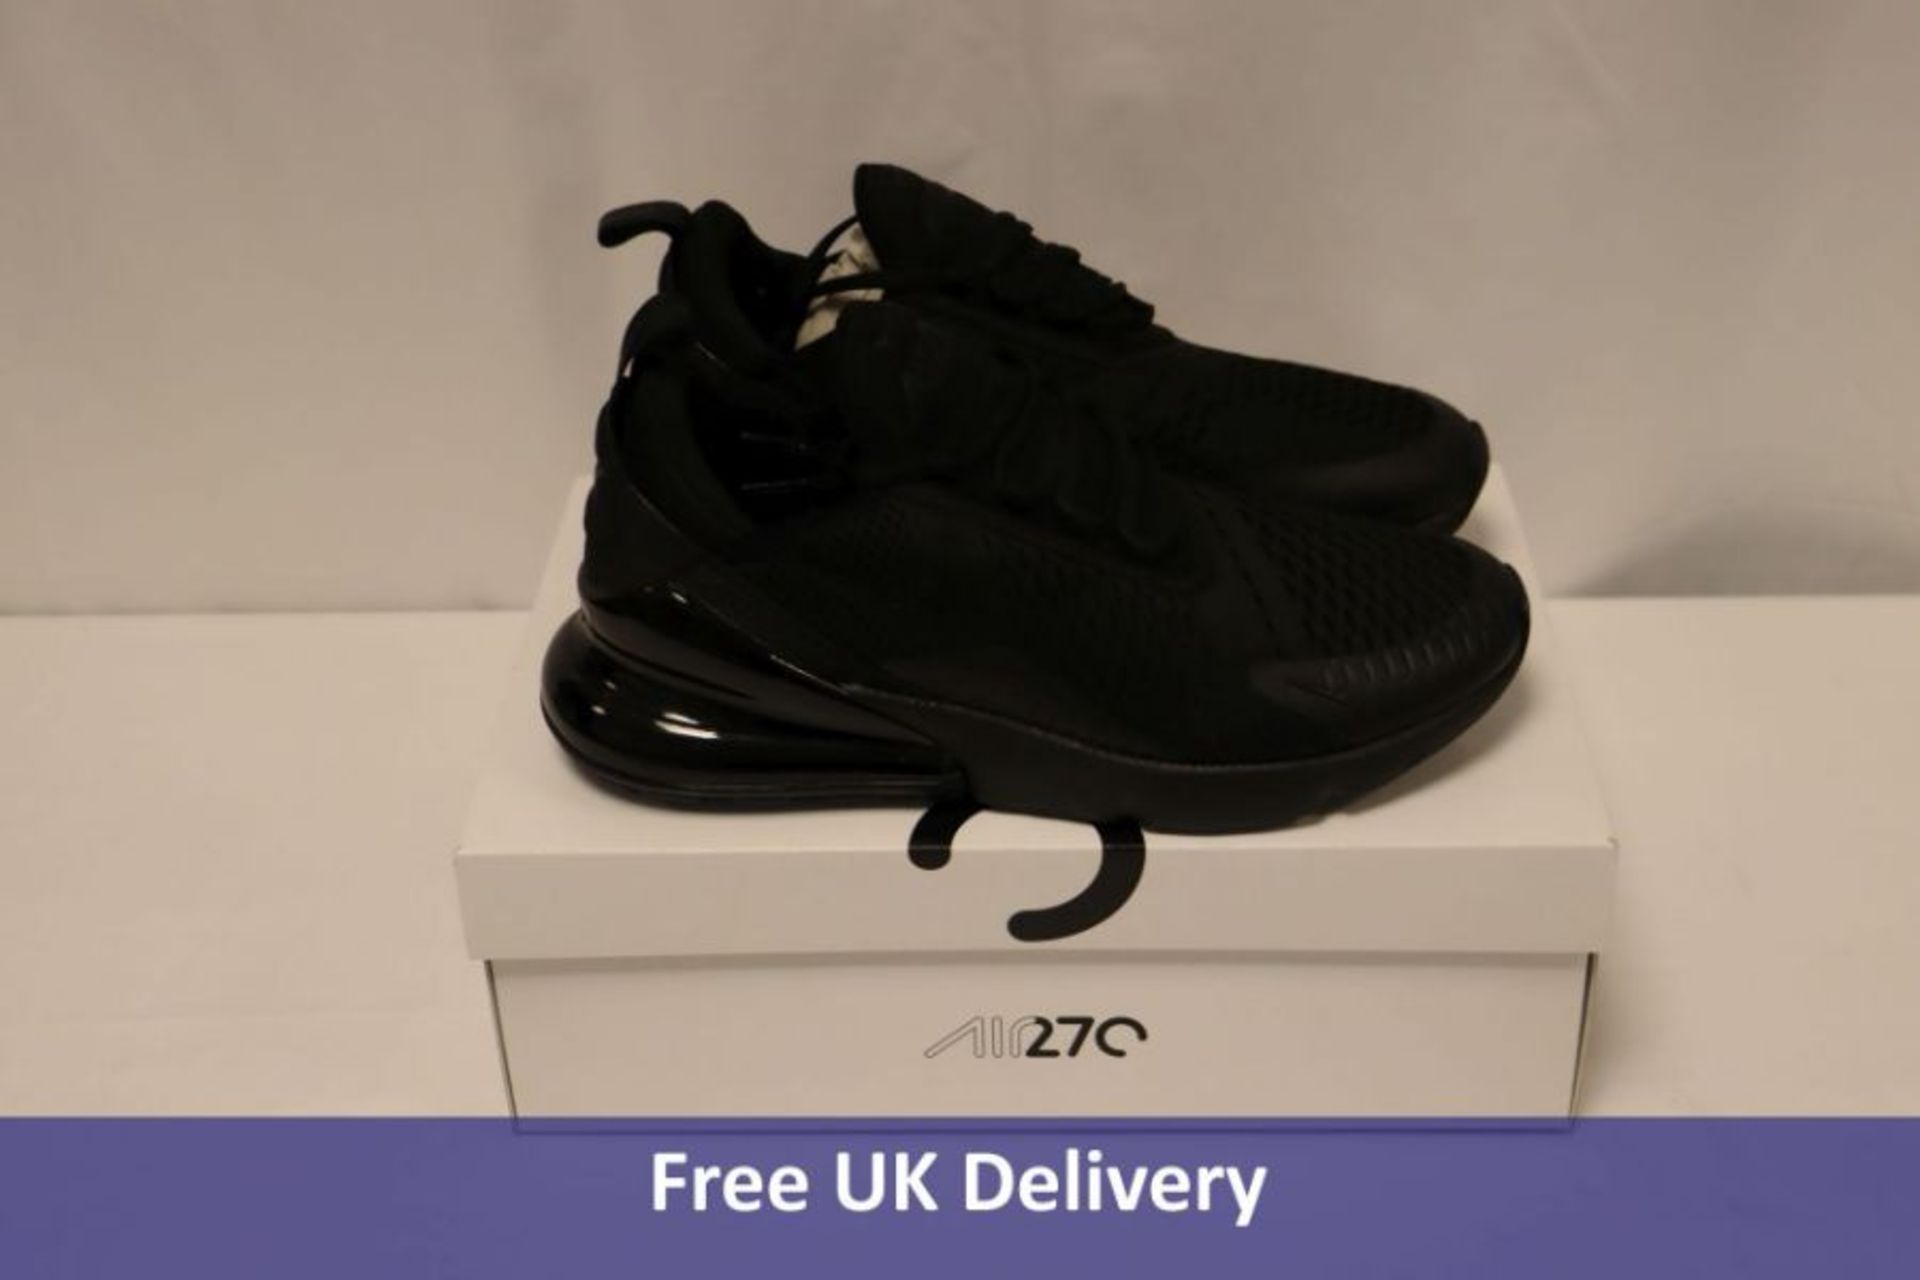 Nike Air Max 270 Trainers, Black, UK 9.5